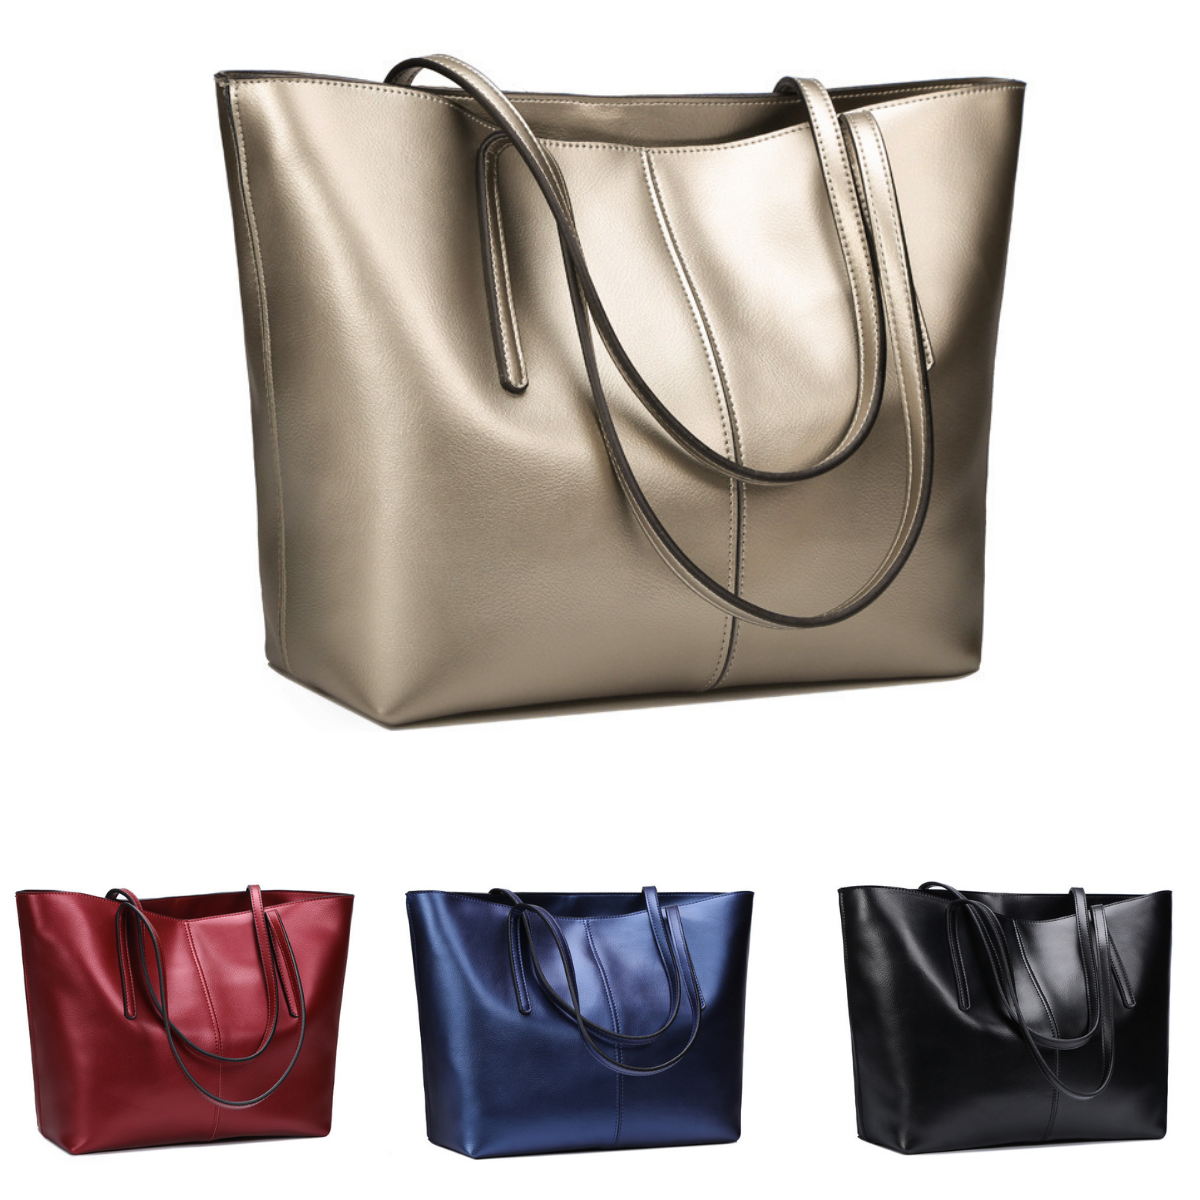 Women's genuine cowhide shining leather handbag depaule design by Tomorrow Closet